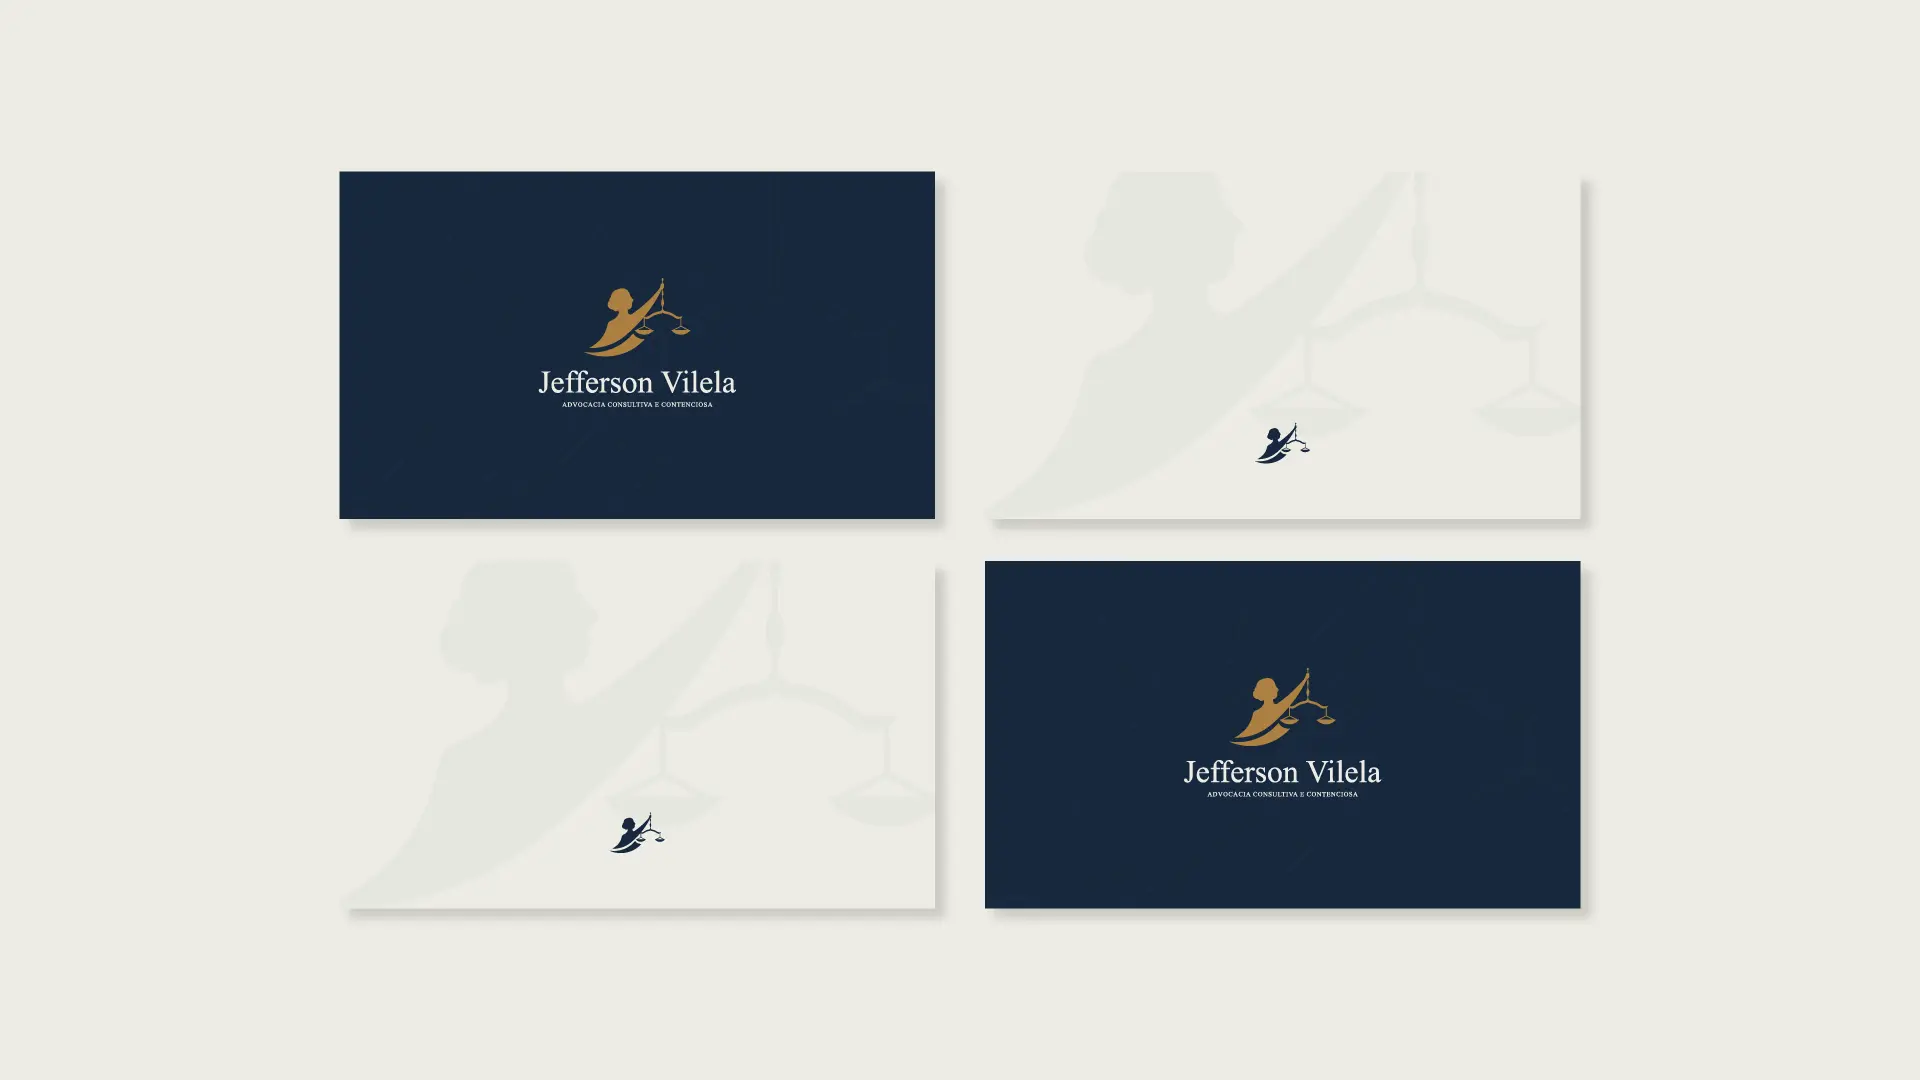 Jefferson Vilela´s business cards